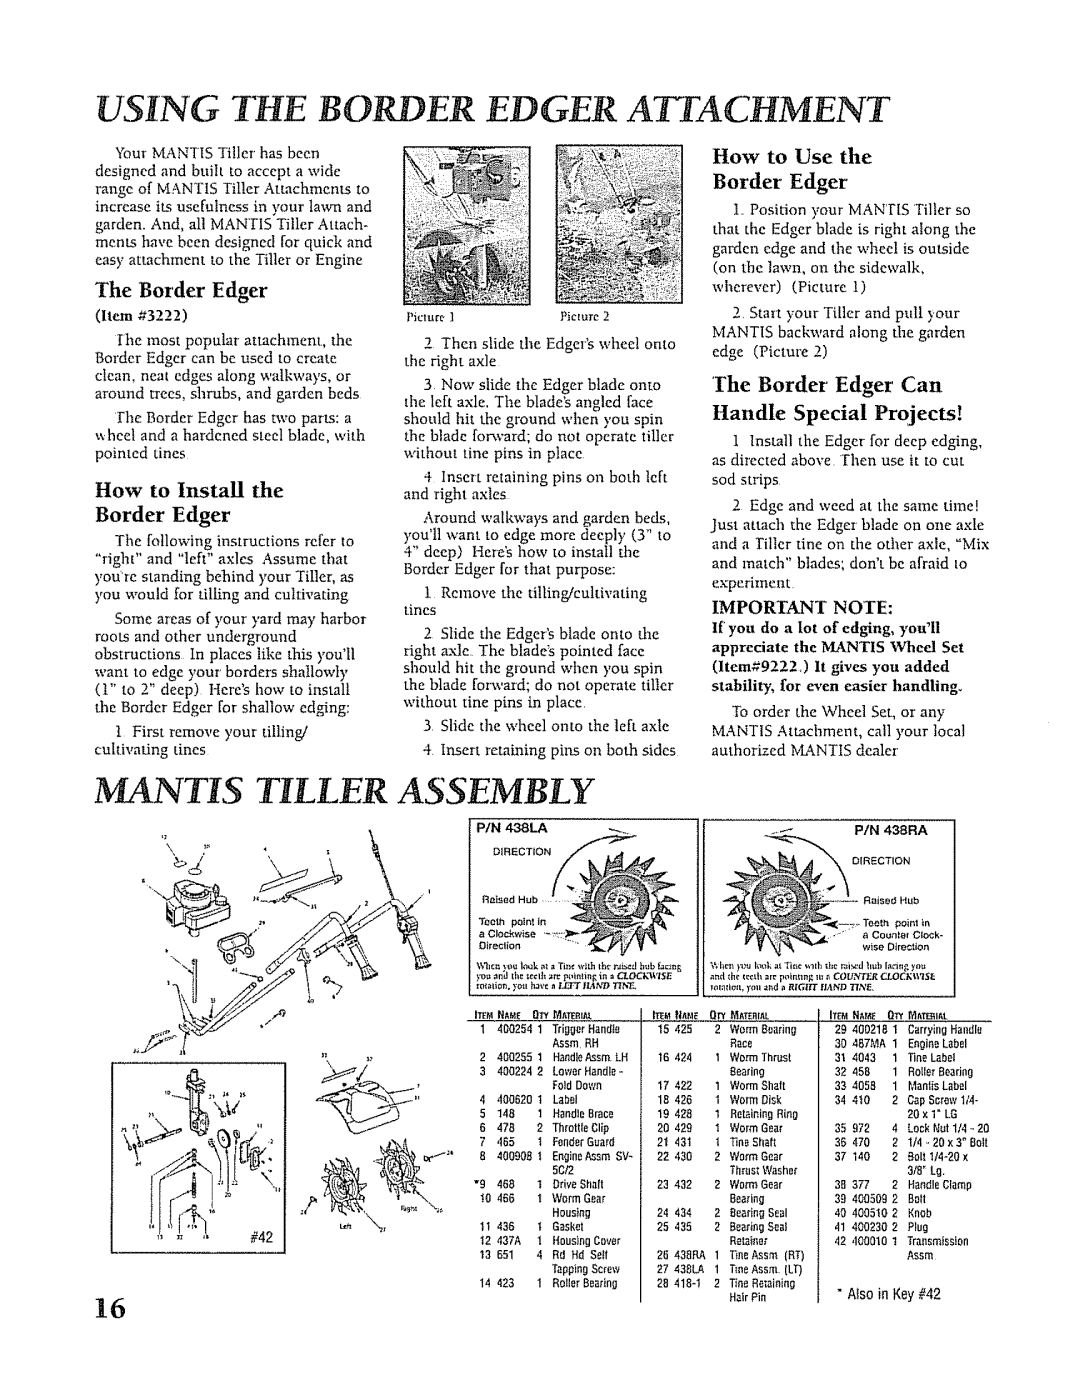 Mantis SV-5C/2 manual Using The Border Edger Attachment, Mantis Tiller Assembly, How to install the Border Edger 